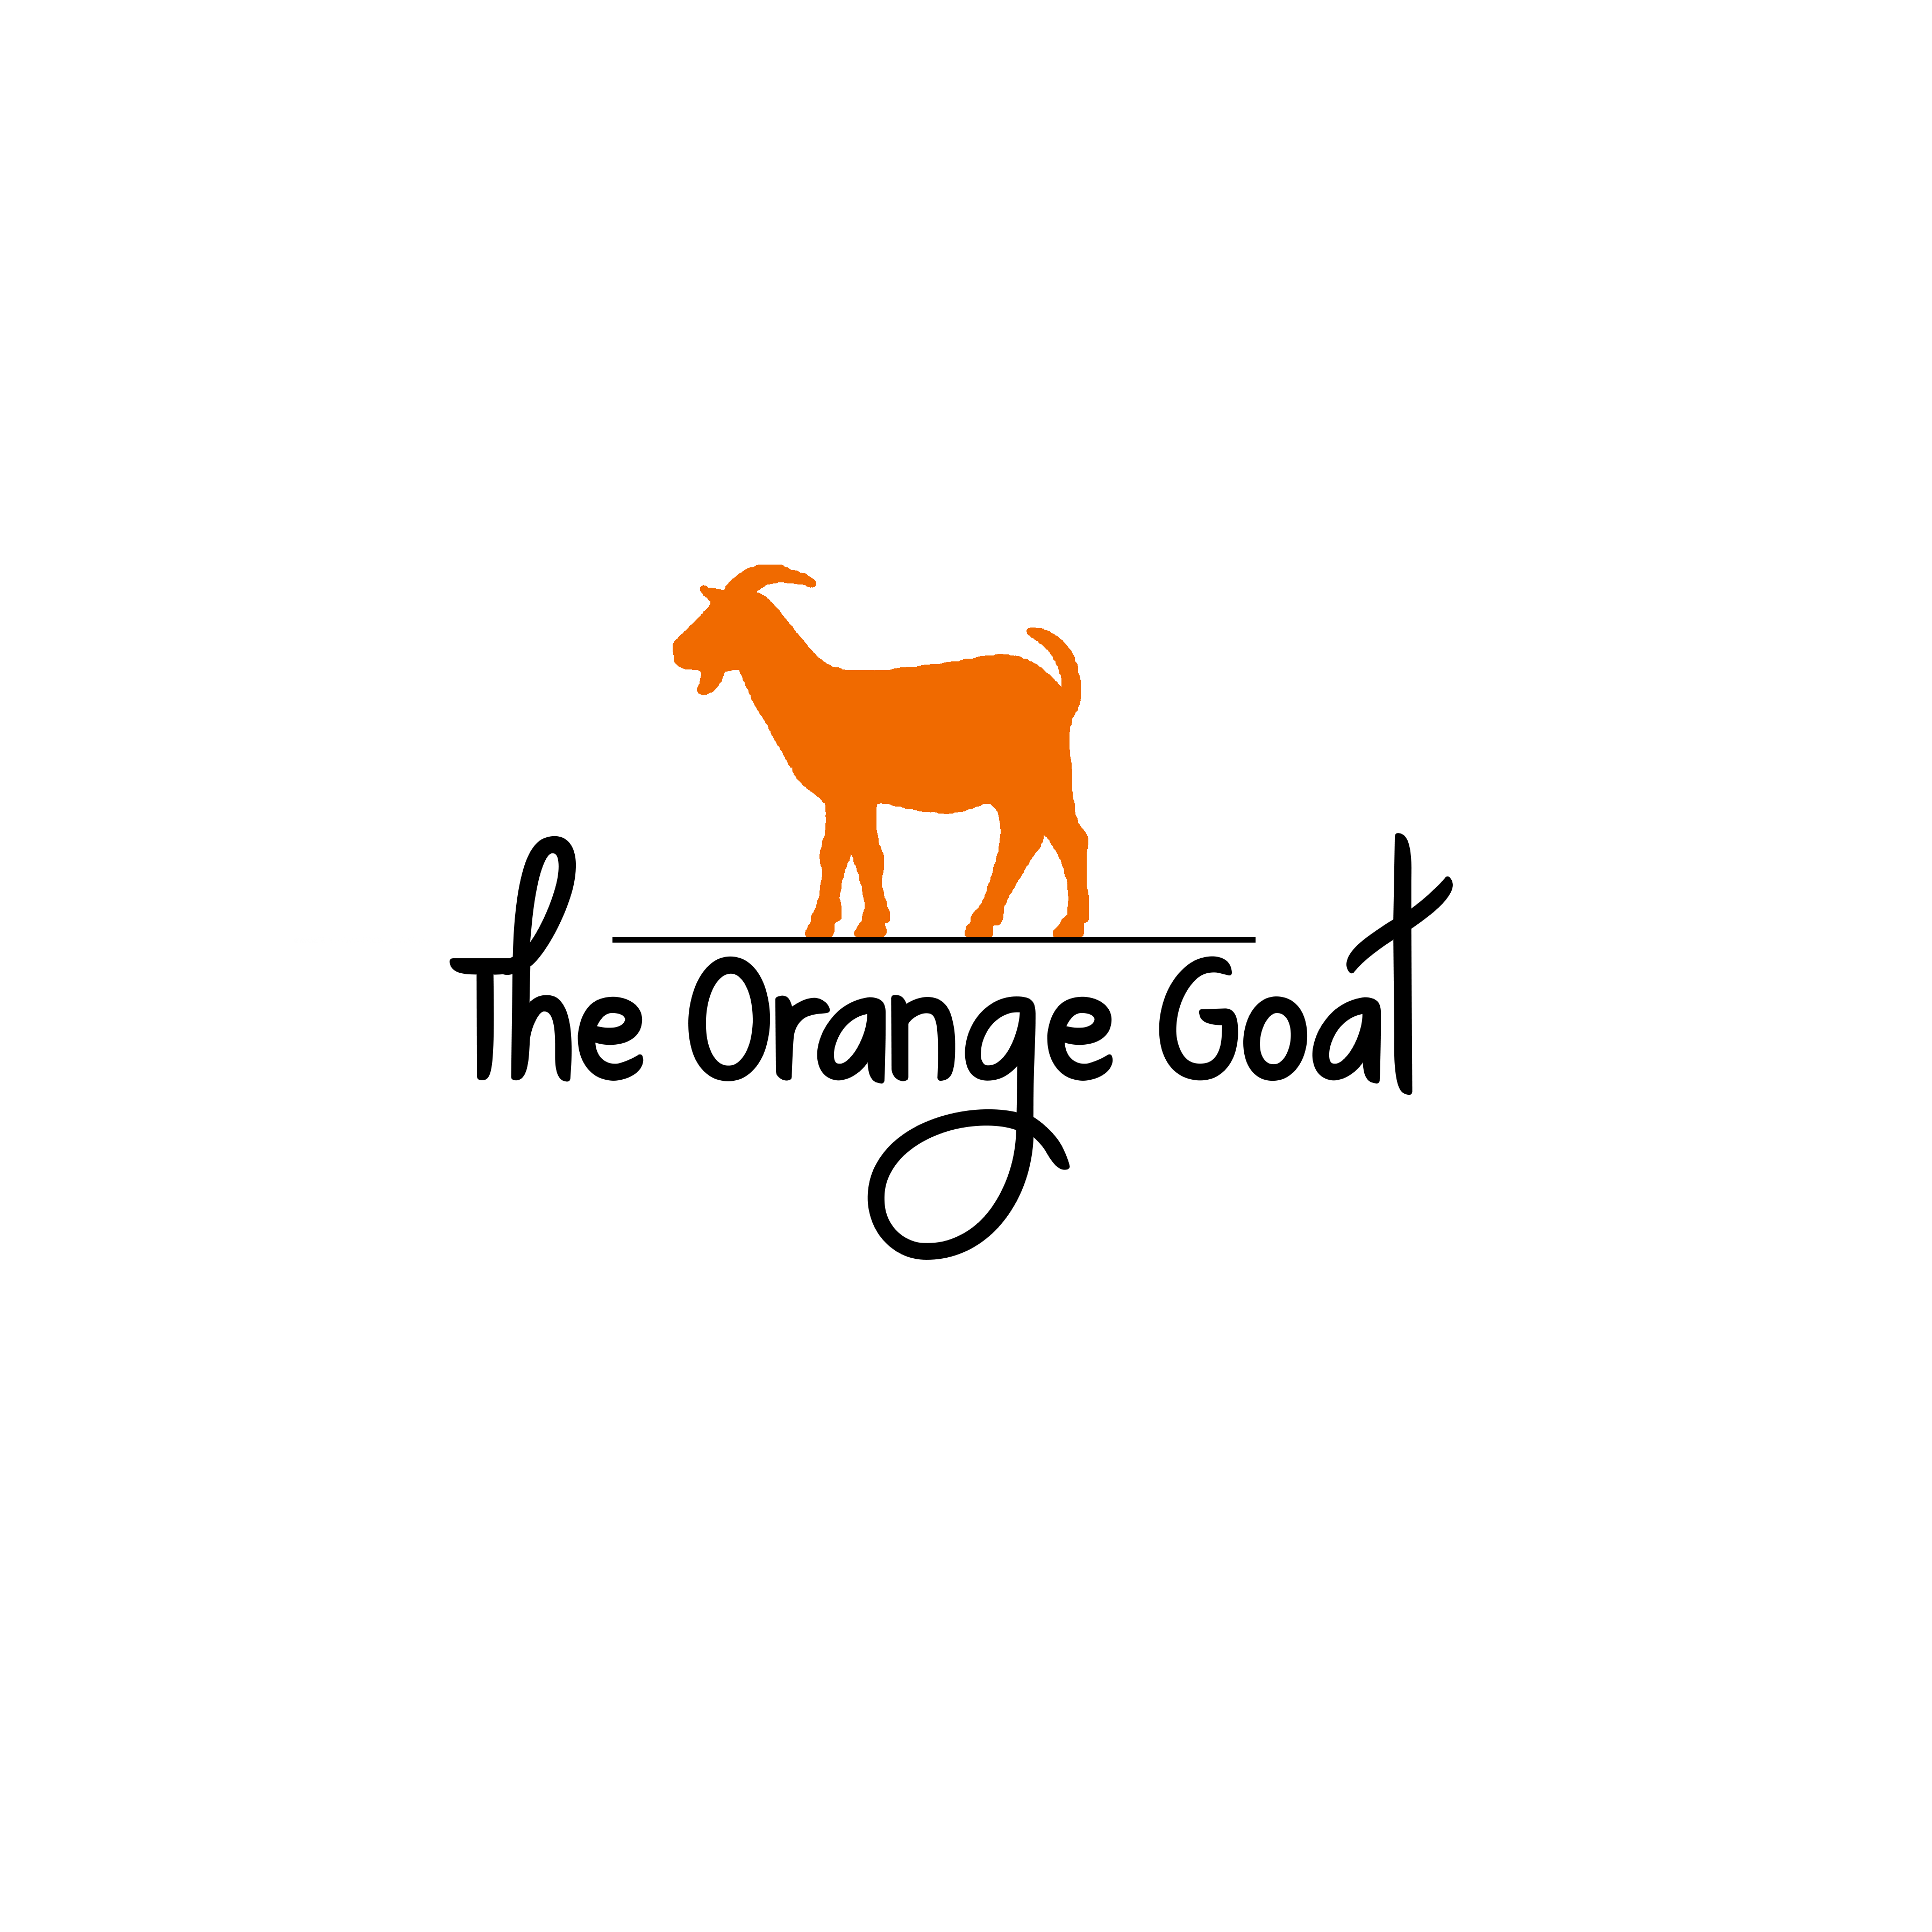 The Orange Goat